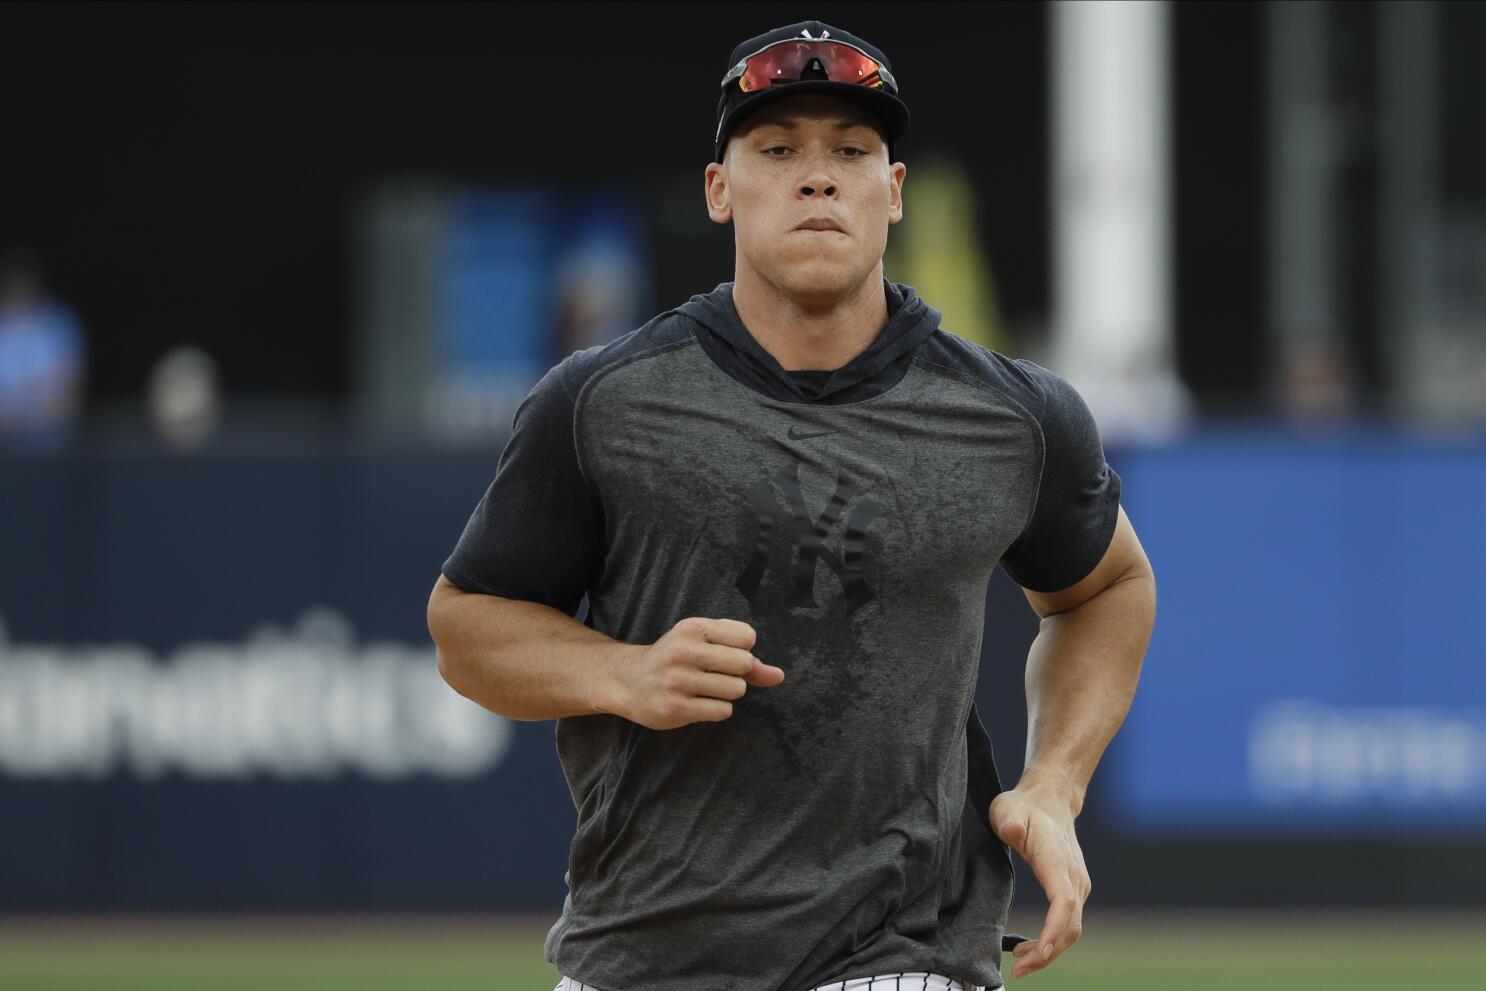 Aaron Judge, Giancarlo Stanton unlikely for Yankees' opener - The